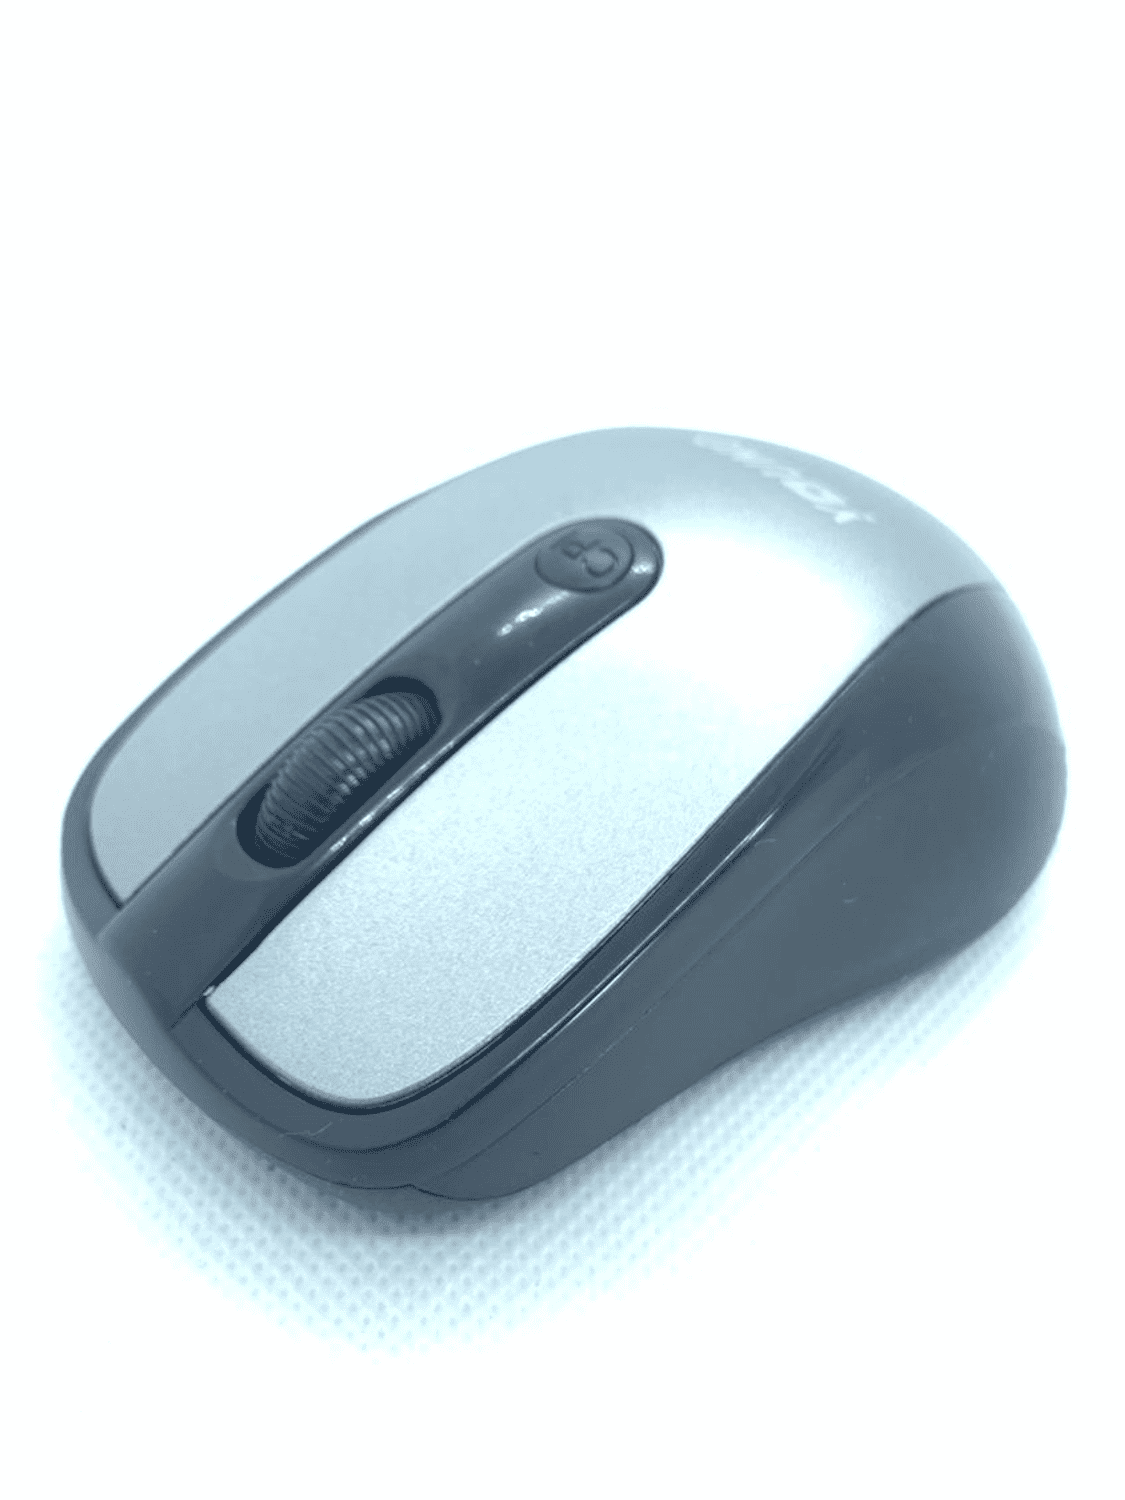 Mouse inalámbrico wireless Young Dp1600 - Tecniquero